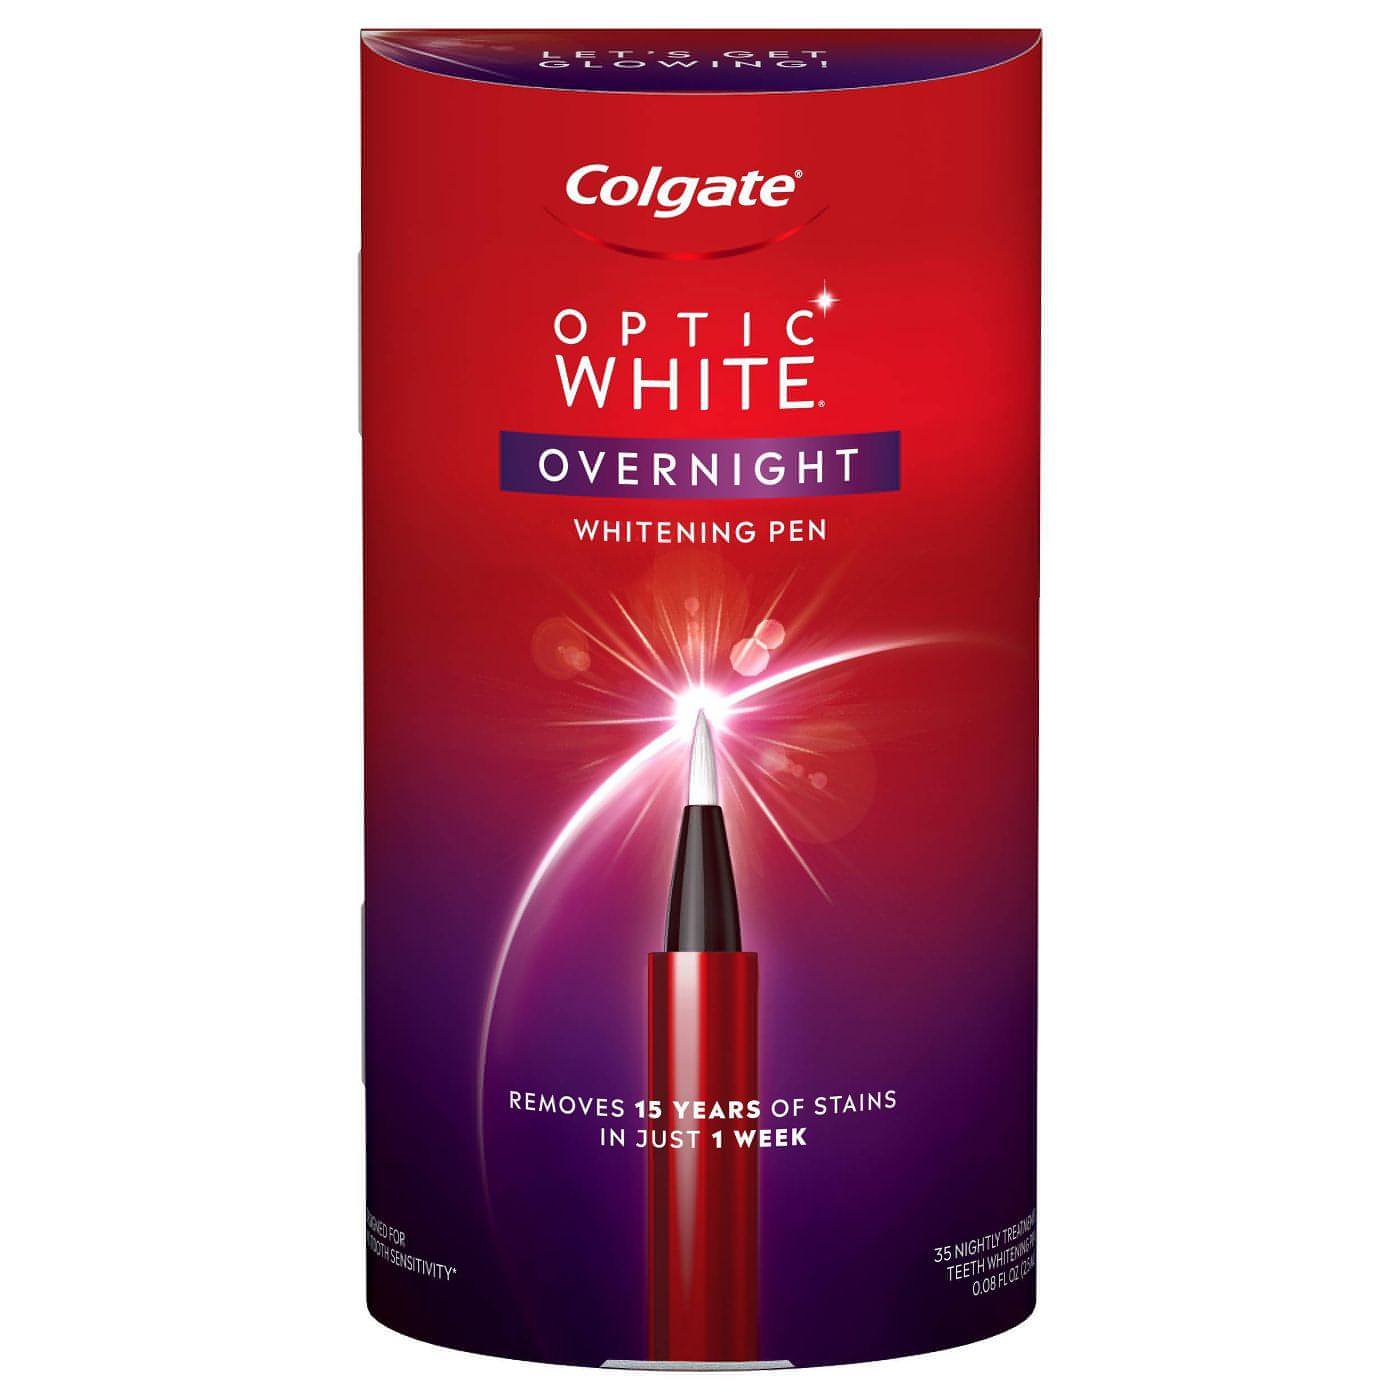 Colgate Optic White Overnight Teeth Whitening Pen, Teeth Stain Remover to Whiten Teeth, 35 Nightly Treatments, Hydrogen Peroxide Gel - 0.08 fl oz - Brandat Outlet